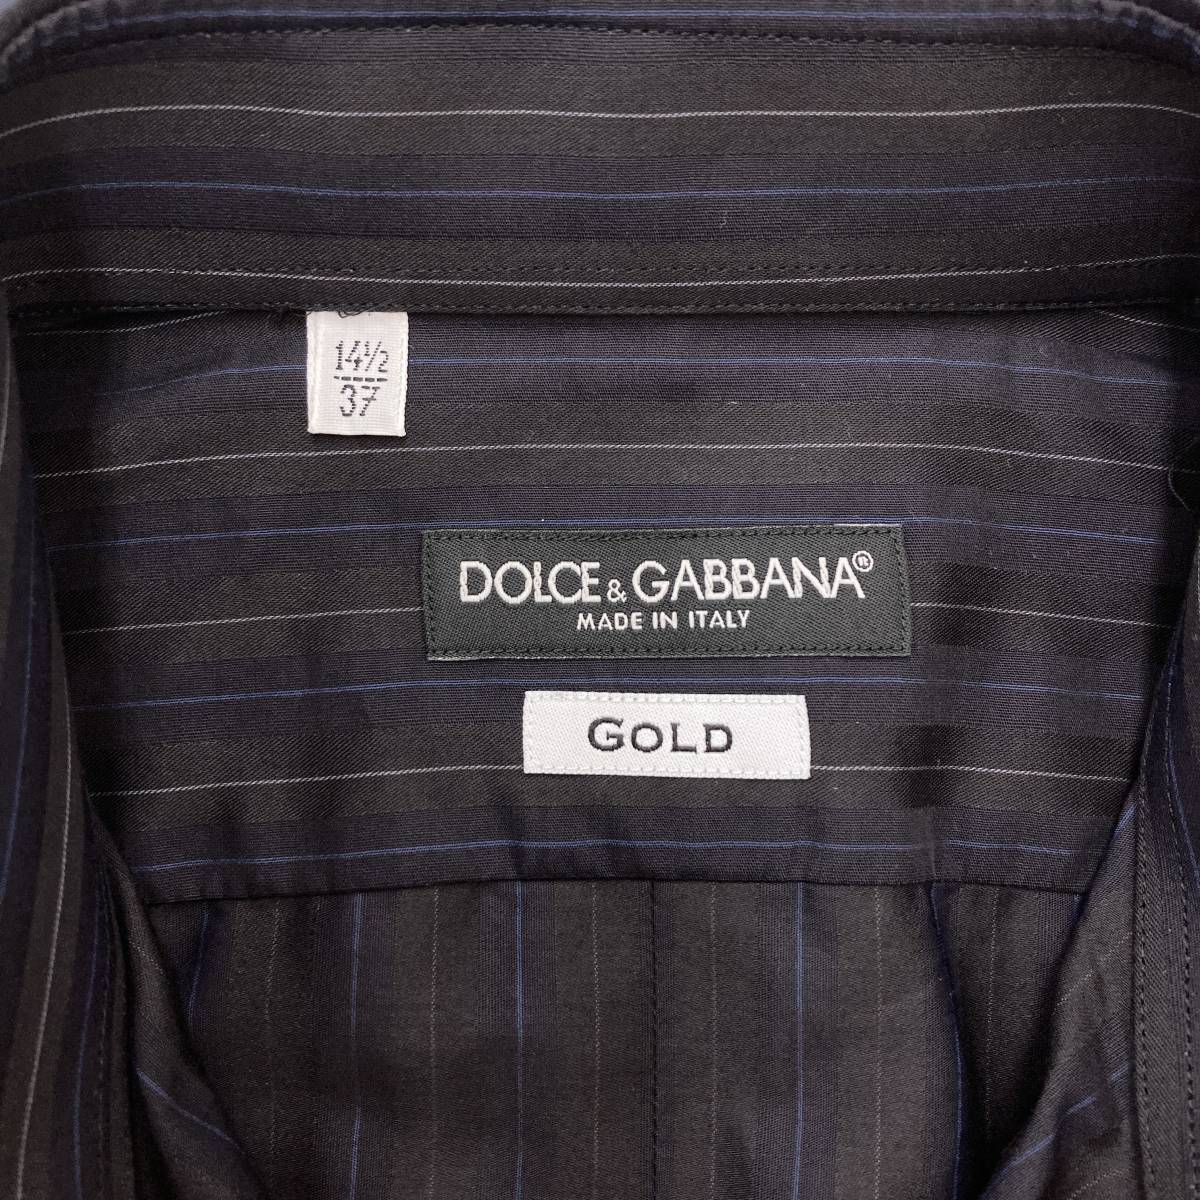 DOLCE&GABBANA GOLD ストライプ 長袖シャツ ブラック イタリア製 メンズ 37サイズ ドルチェ&ガッバーナ ドルガバ D&G 3070055_画像3